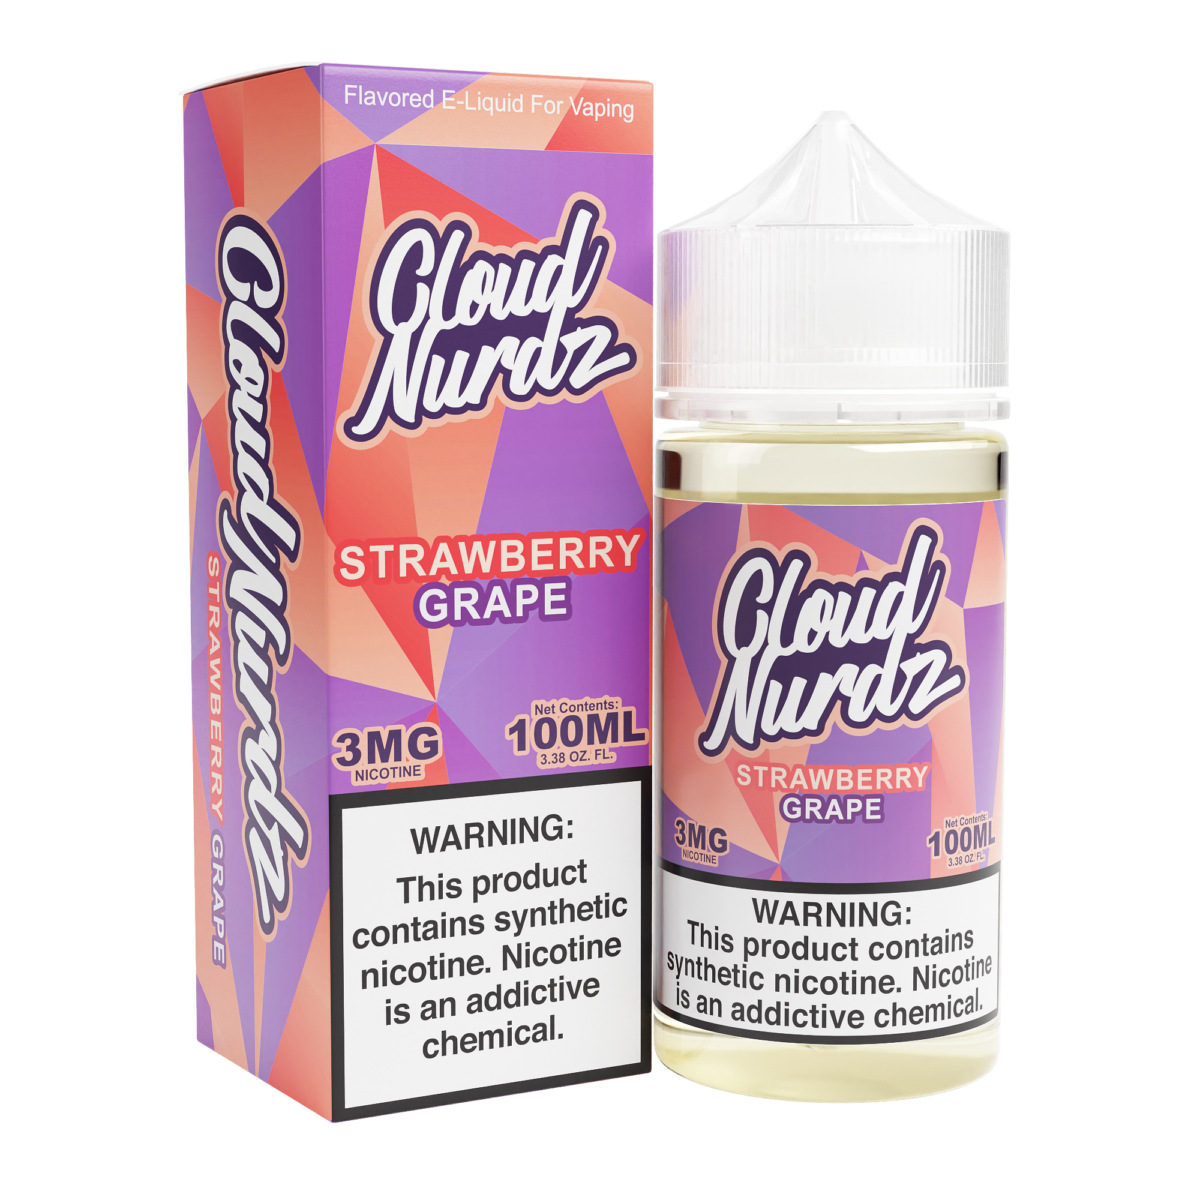 Cloud Nurdz Series E-Liquid 100mL Grape Strawberry with packaging